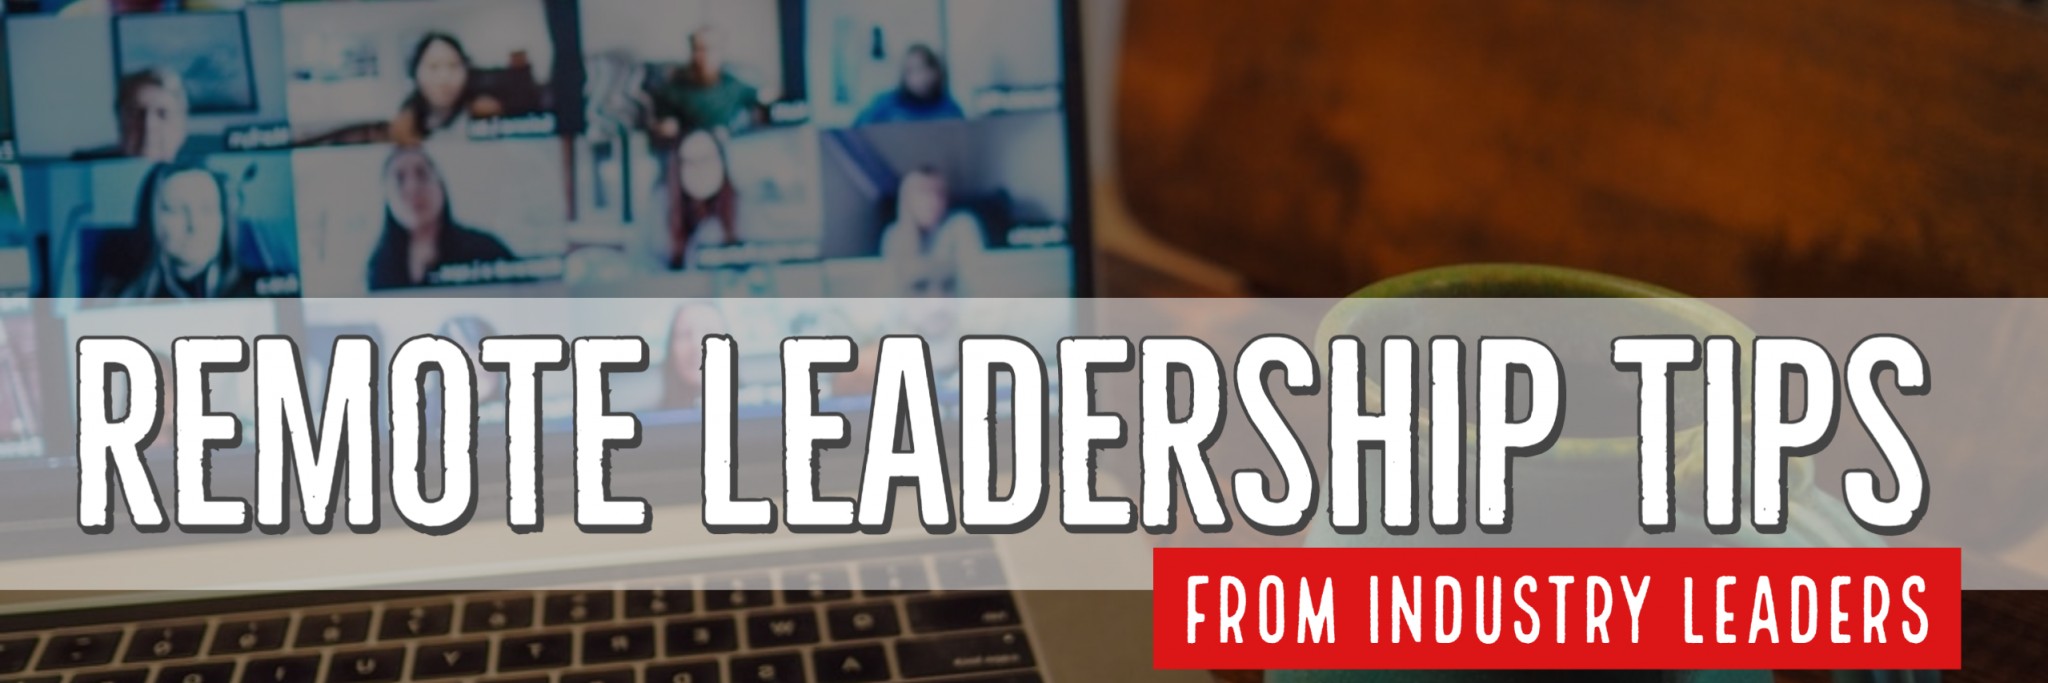 Whitaker - Remote Leadership Tips